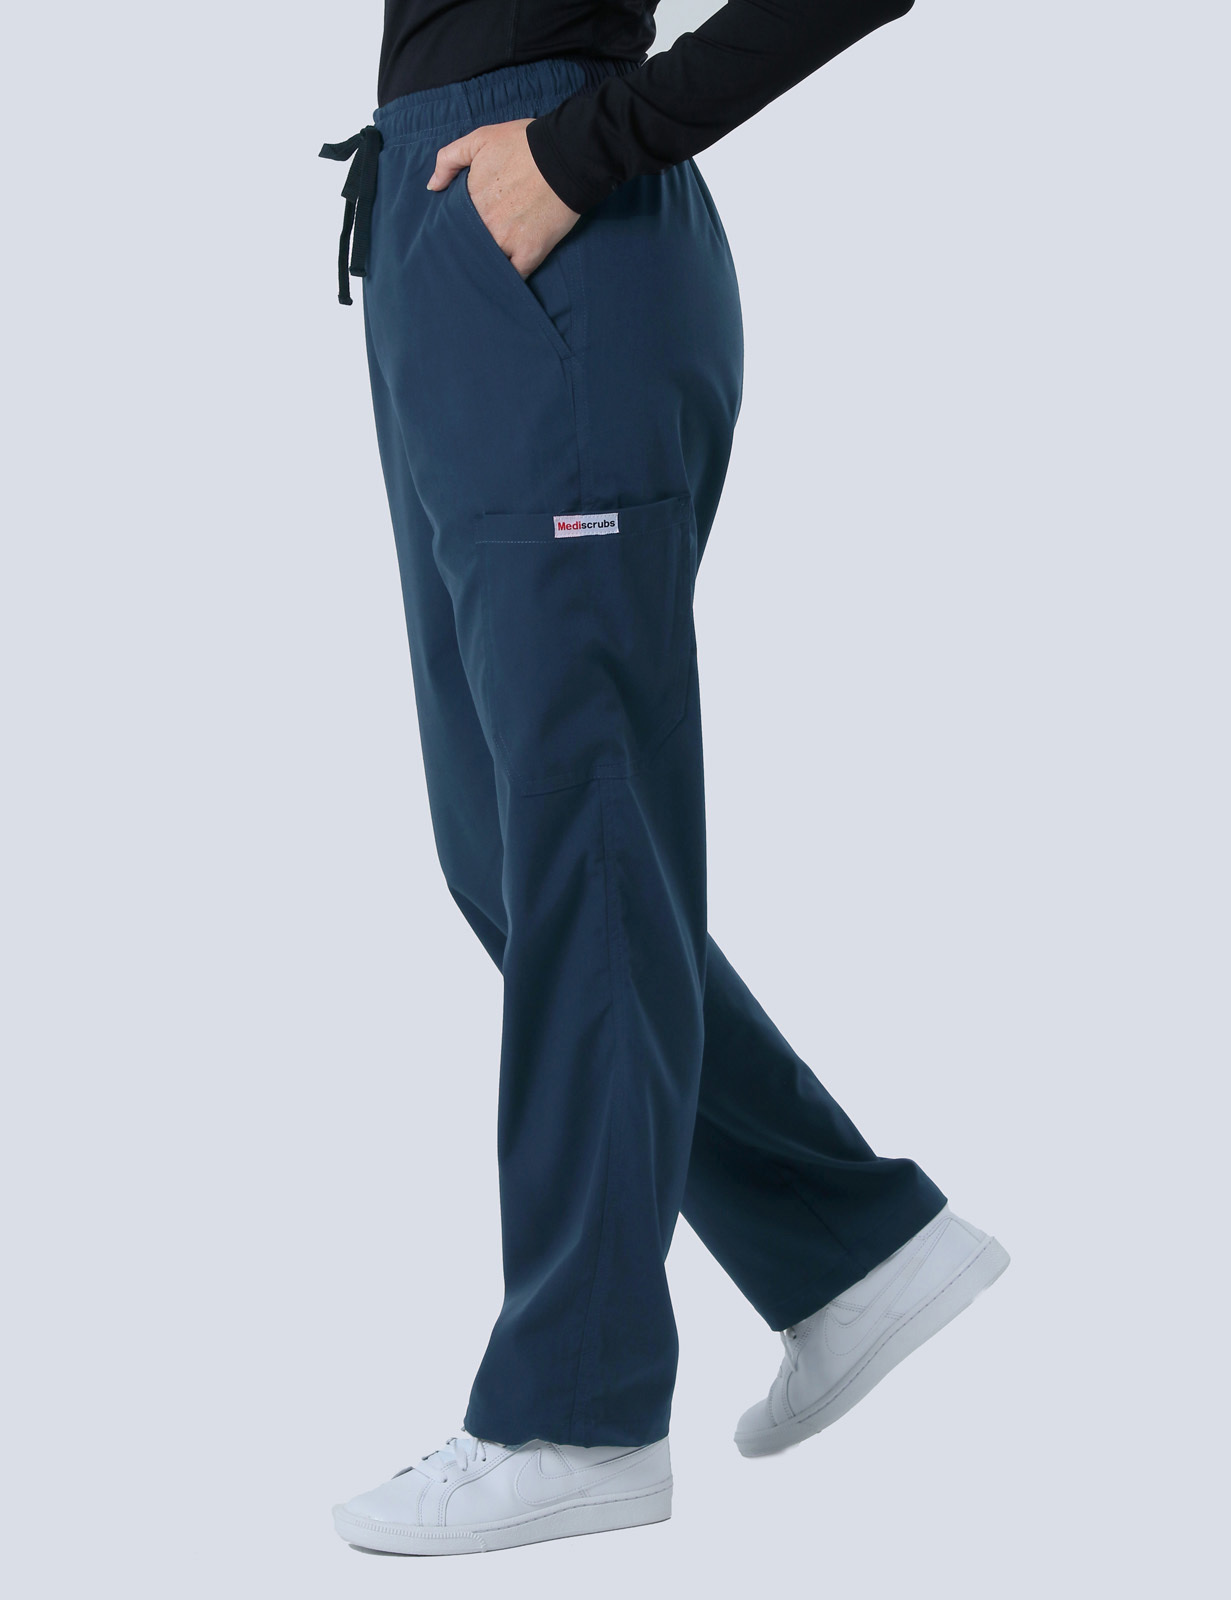 VRH - Nurse (4 Pocket Scrub Top and Cargo Pants in Navy incl Logos)